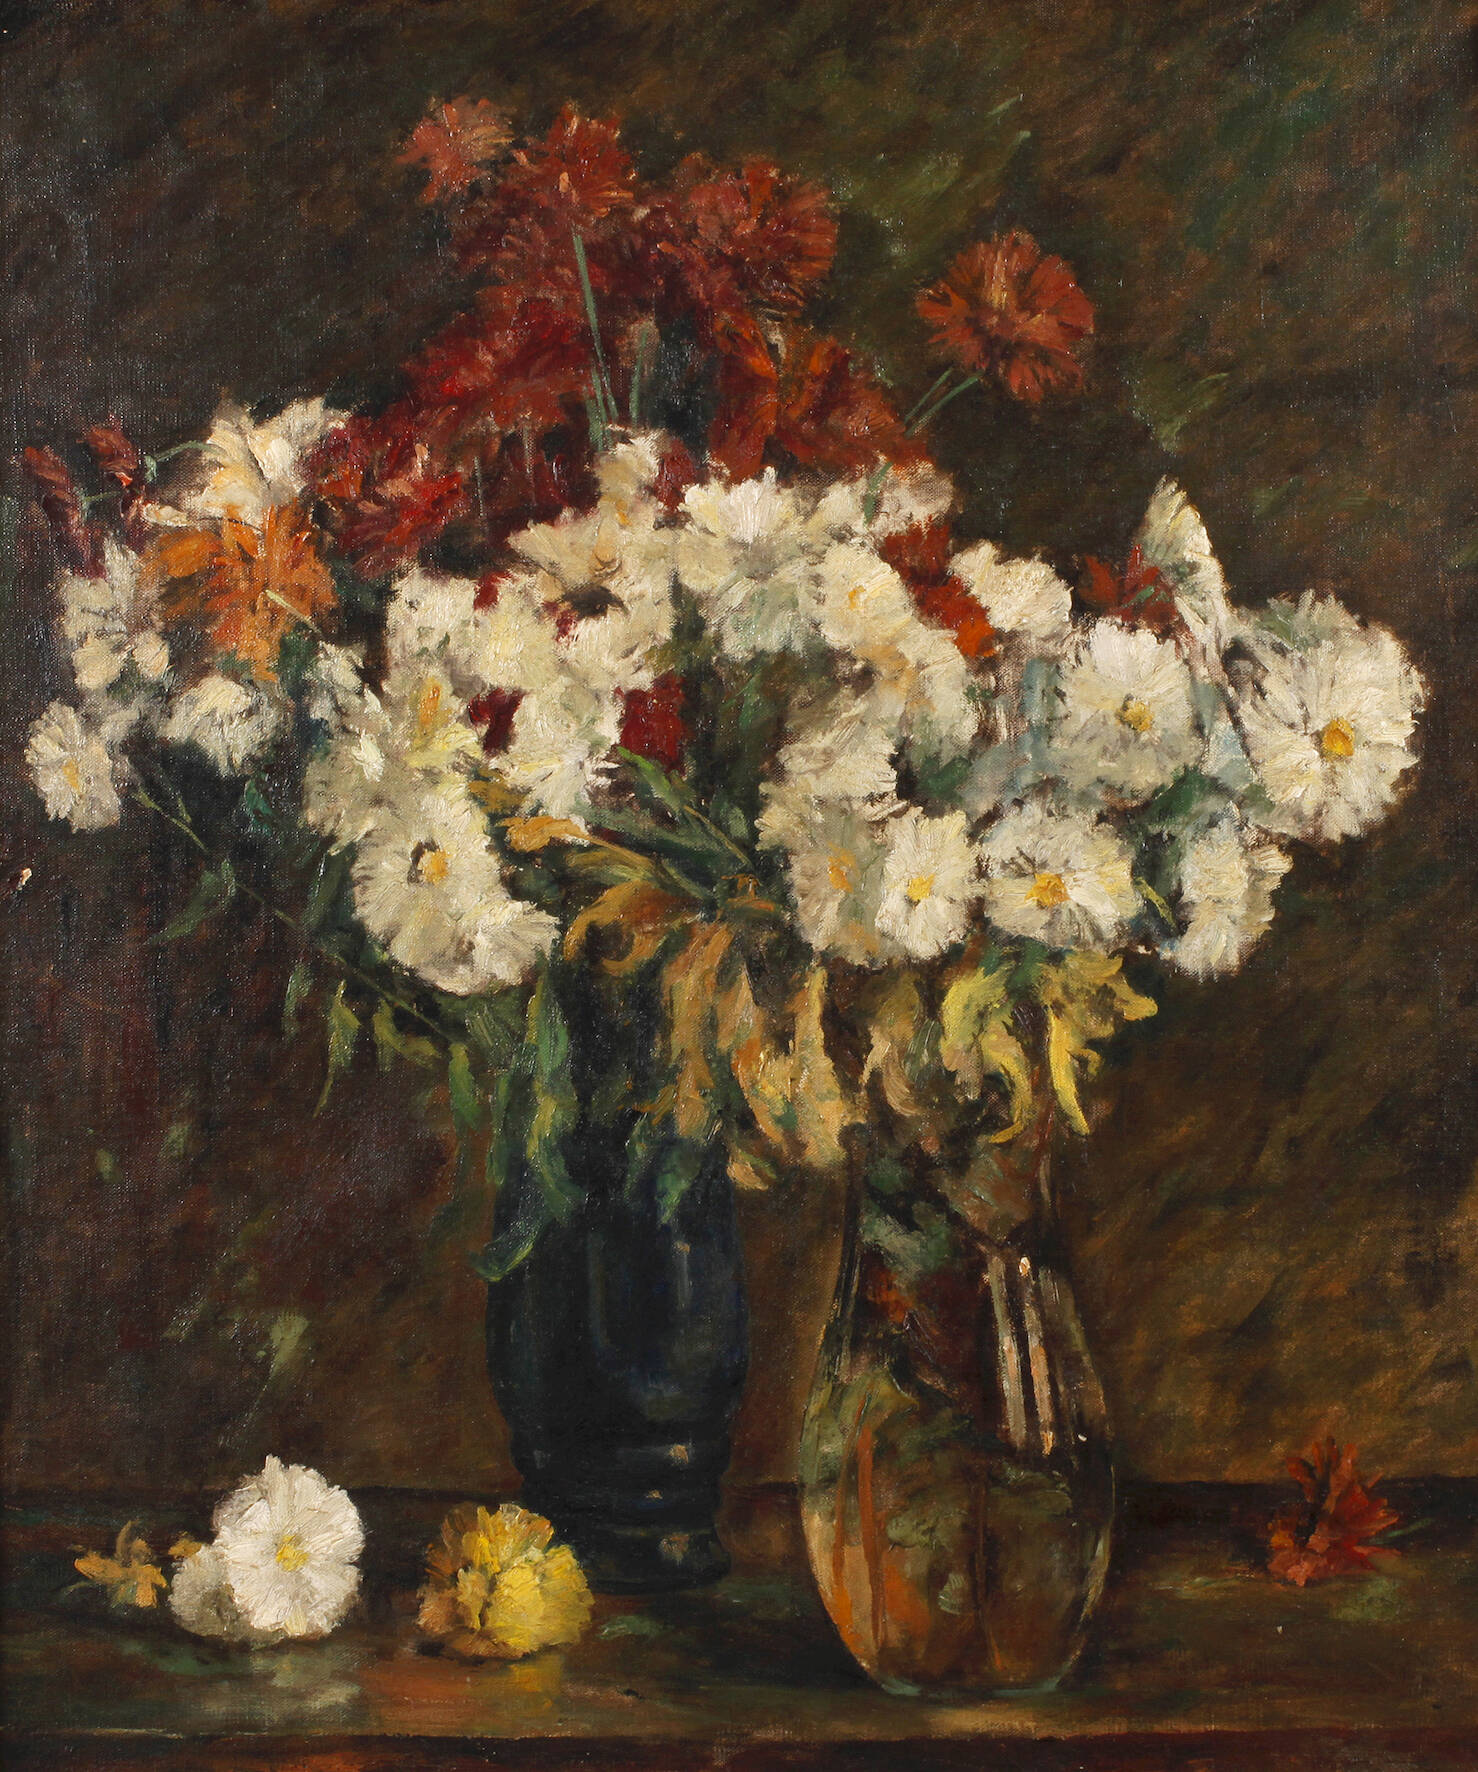 Richard Miller, "Chrysanthemen"